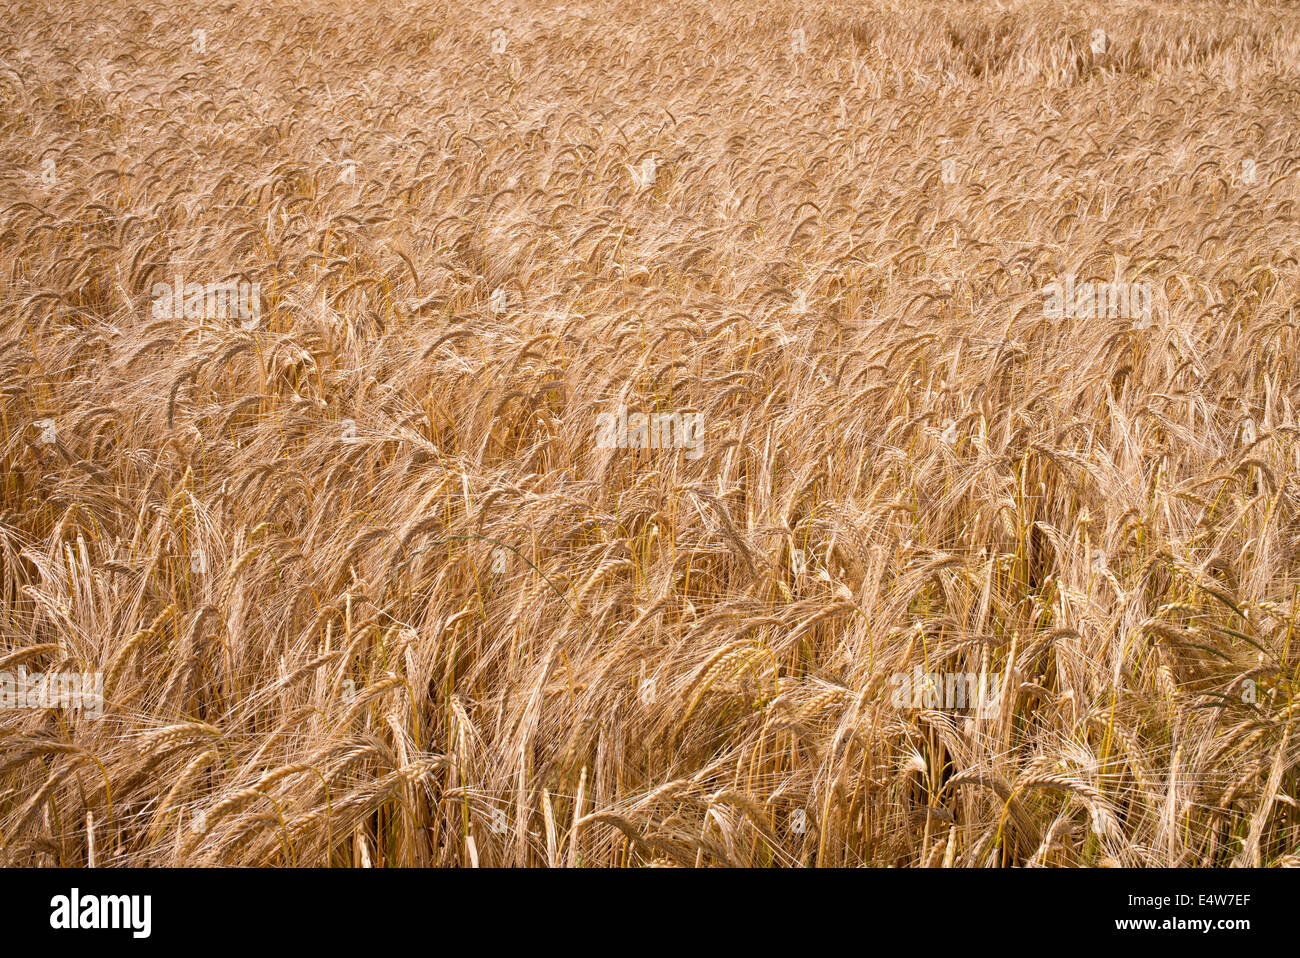 Hordeum vulgare. Barley field Stock Photo